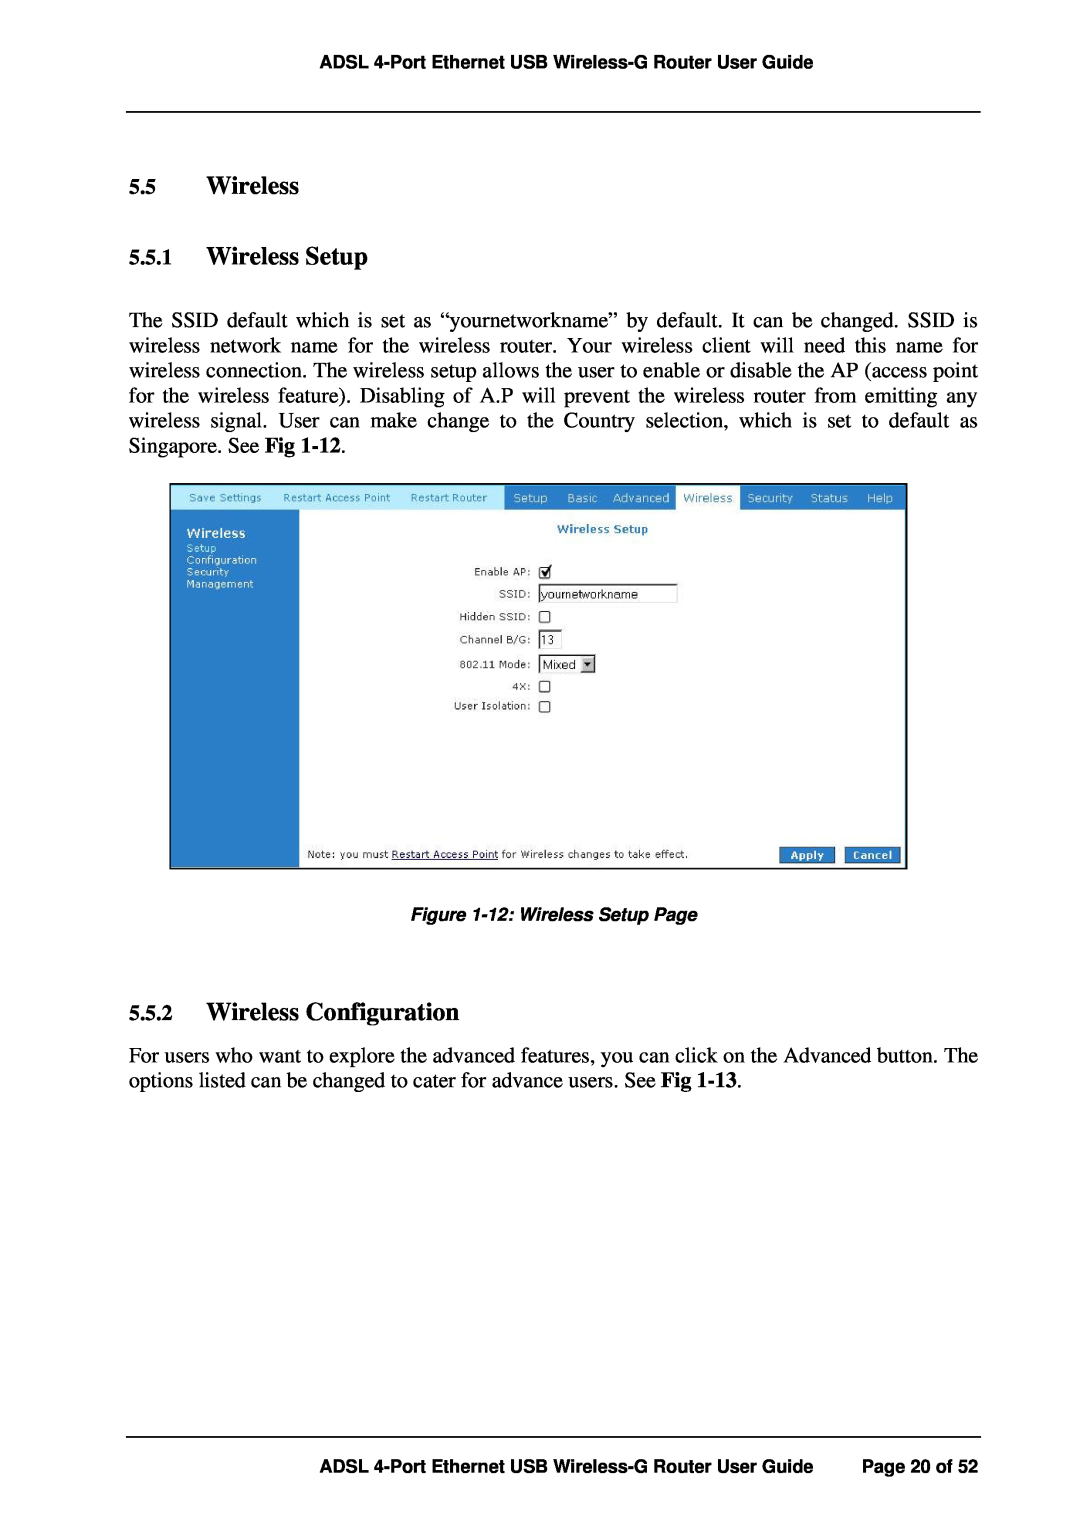 APC ADSL 4-Port manual Wireless 5.5.1 Wireless Setup, Wireless Configuration, 12 Wireless Setup Page 